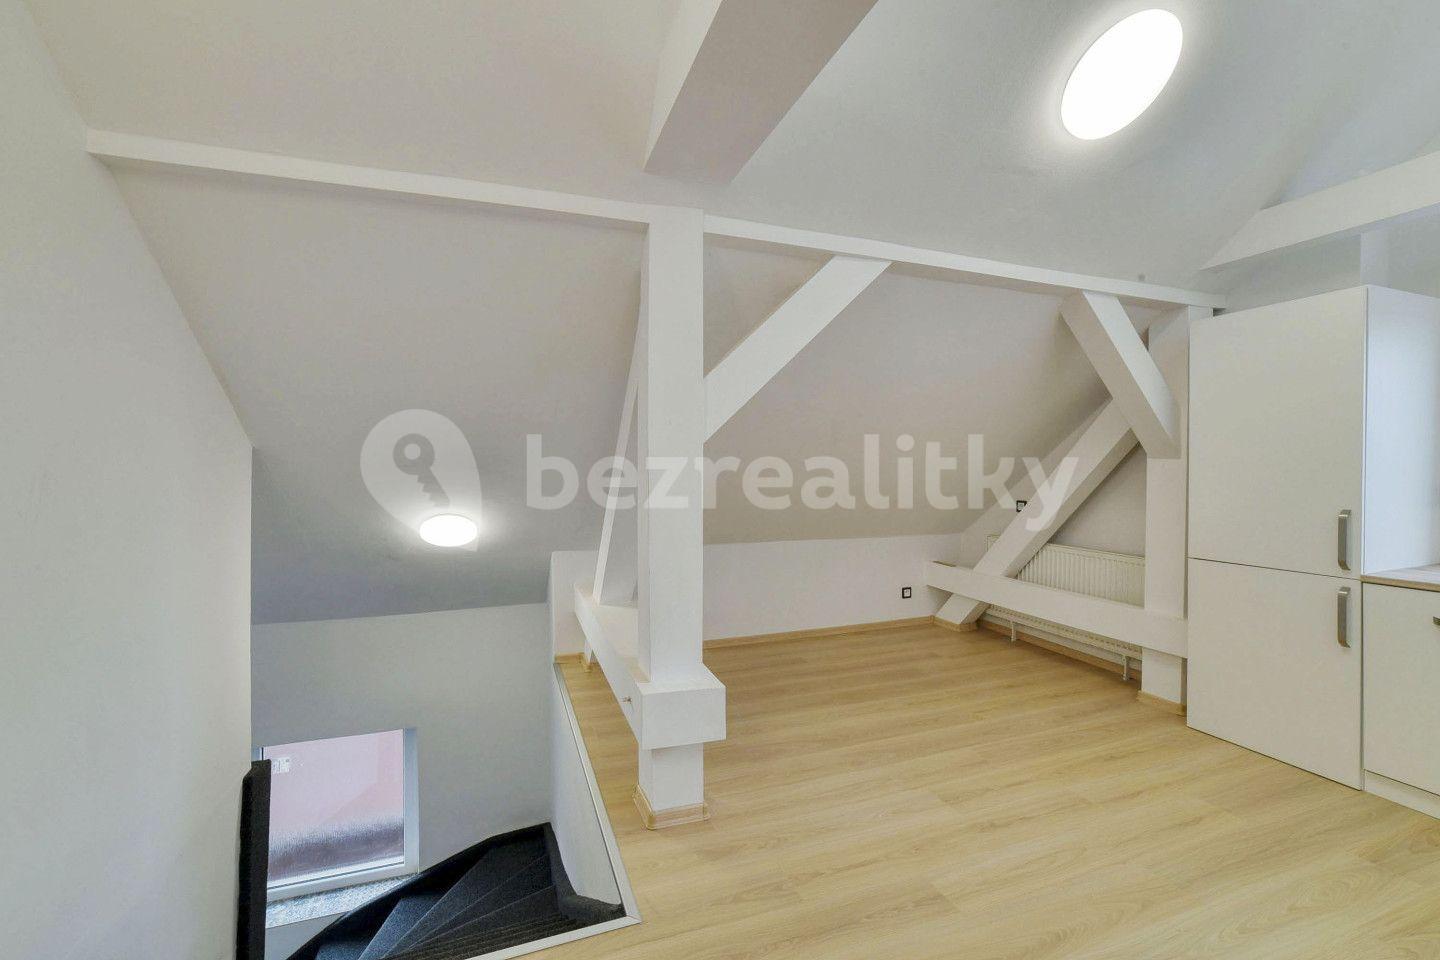 2 bedroom flat for sale, 61 m², Cheb, Karlovarský Region